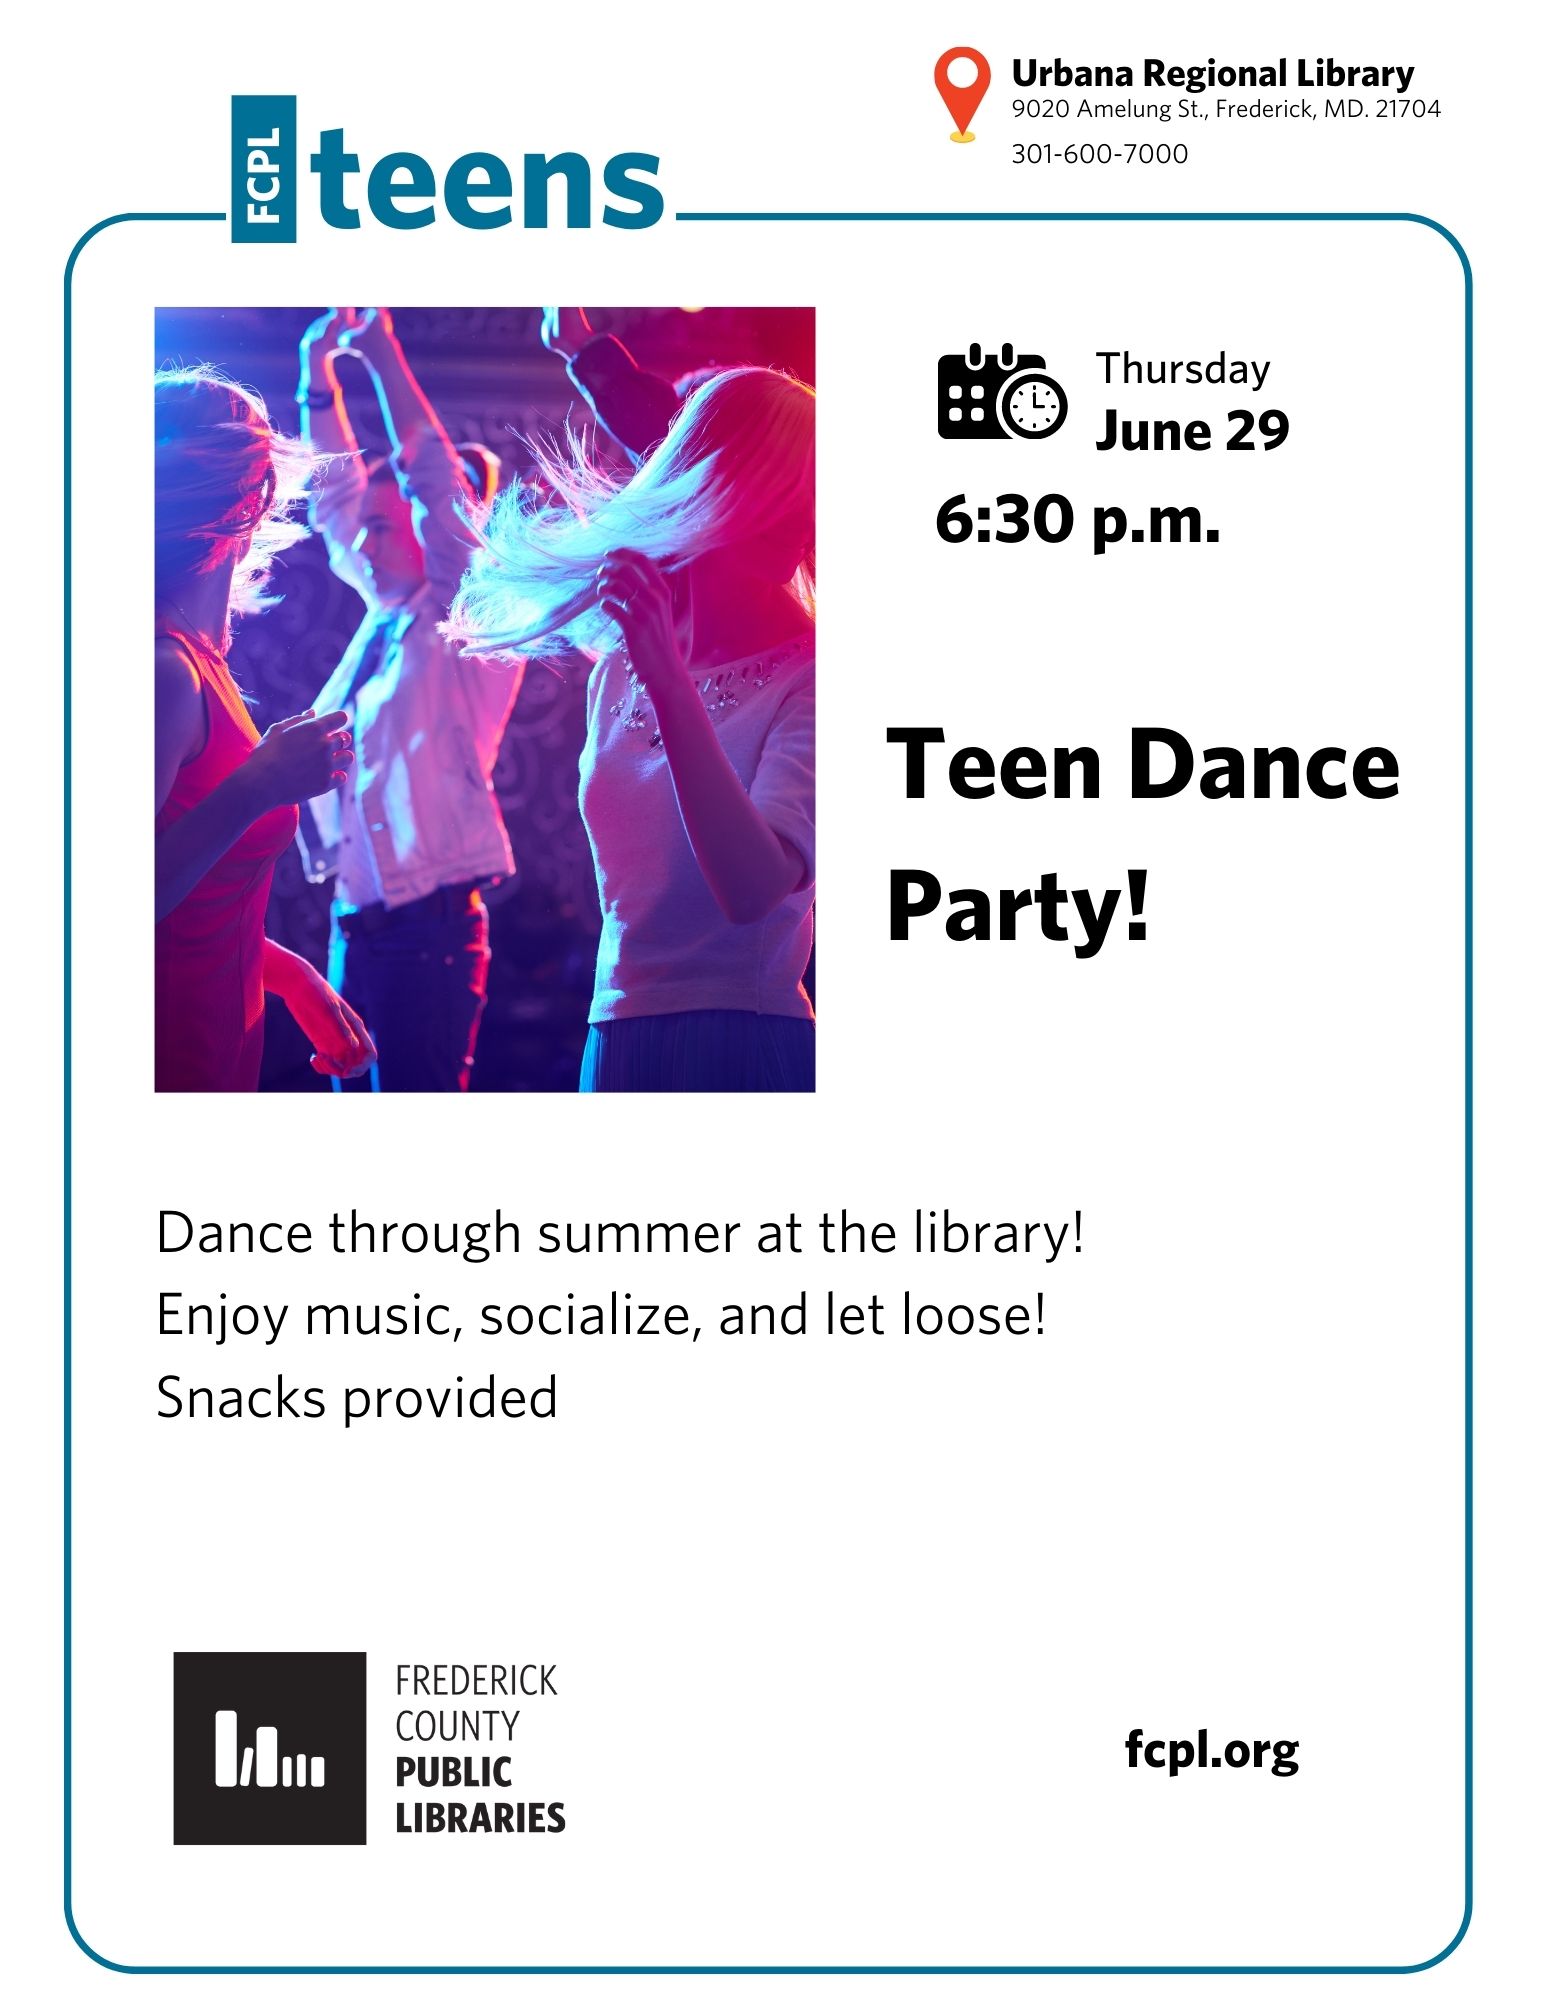 blurry image of teens dancing